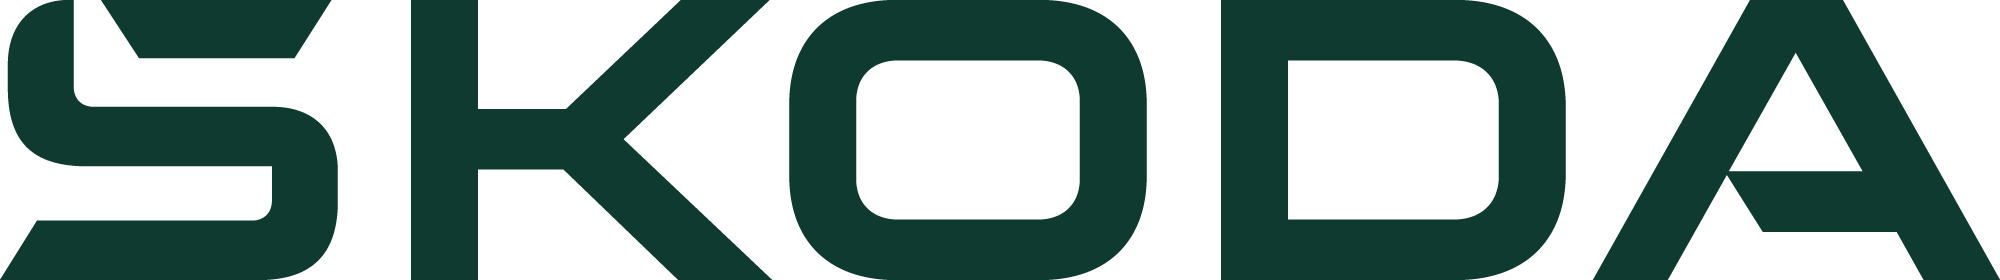 Skoda Mobilitet logo